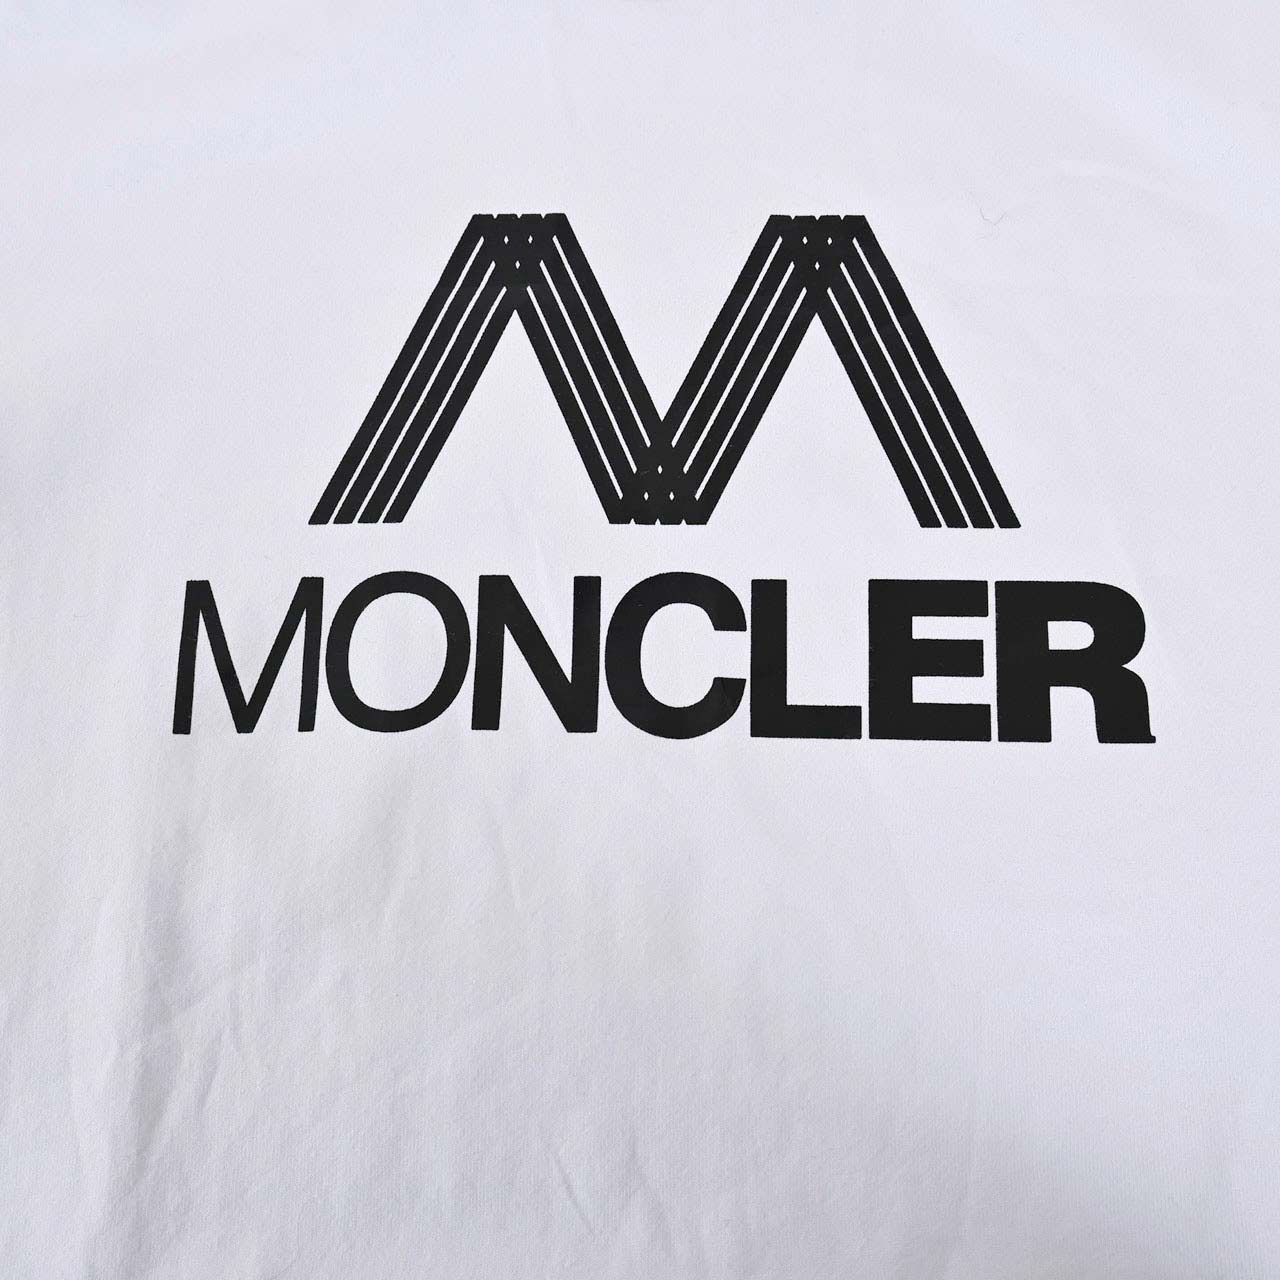 MONCLER Tシャツビックロゴ